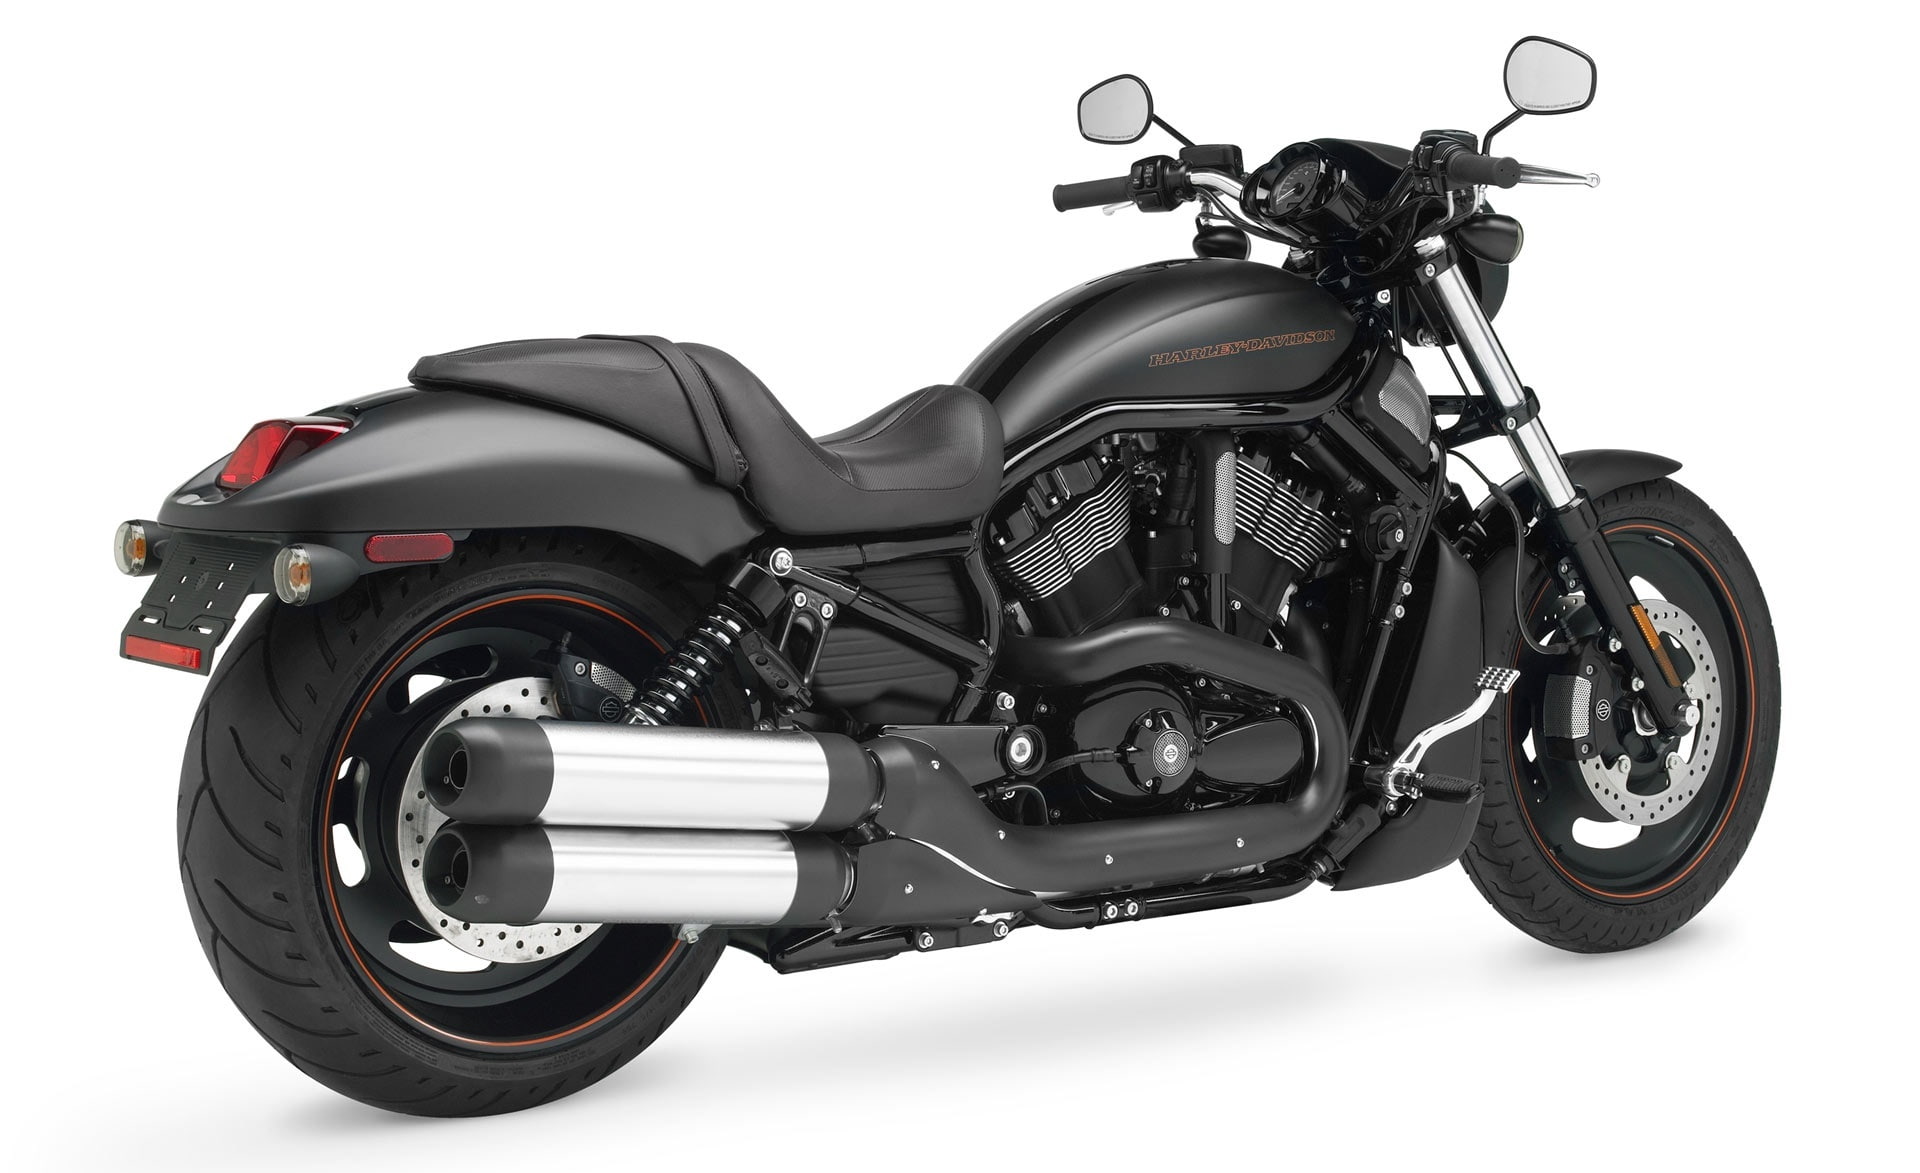 Harley Davidson VRSCDX Night Rod Motorcycle, black Harley-Davidson cruiser motorcycle